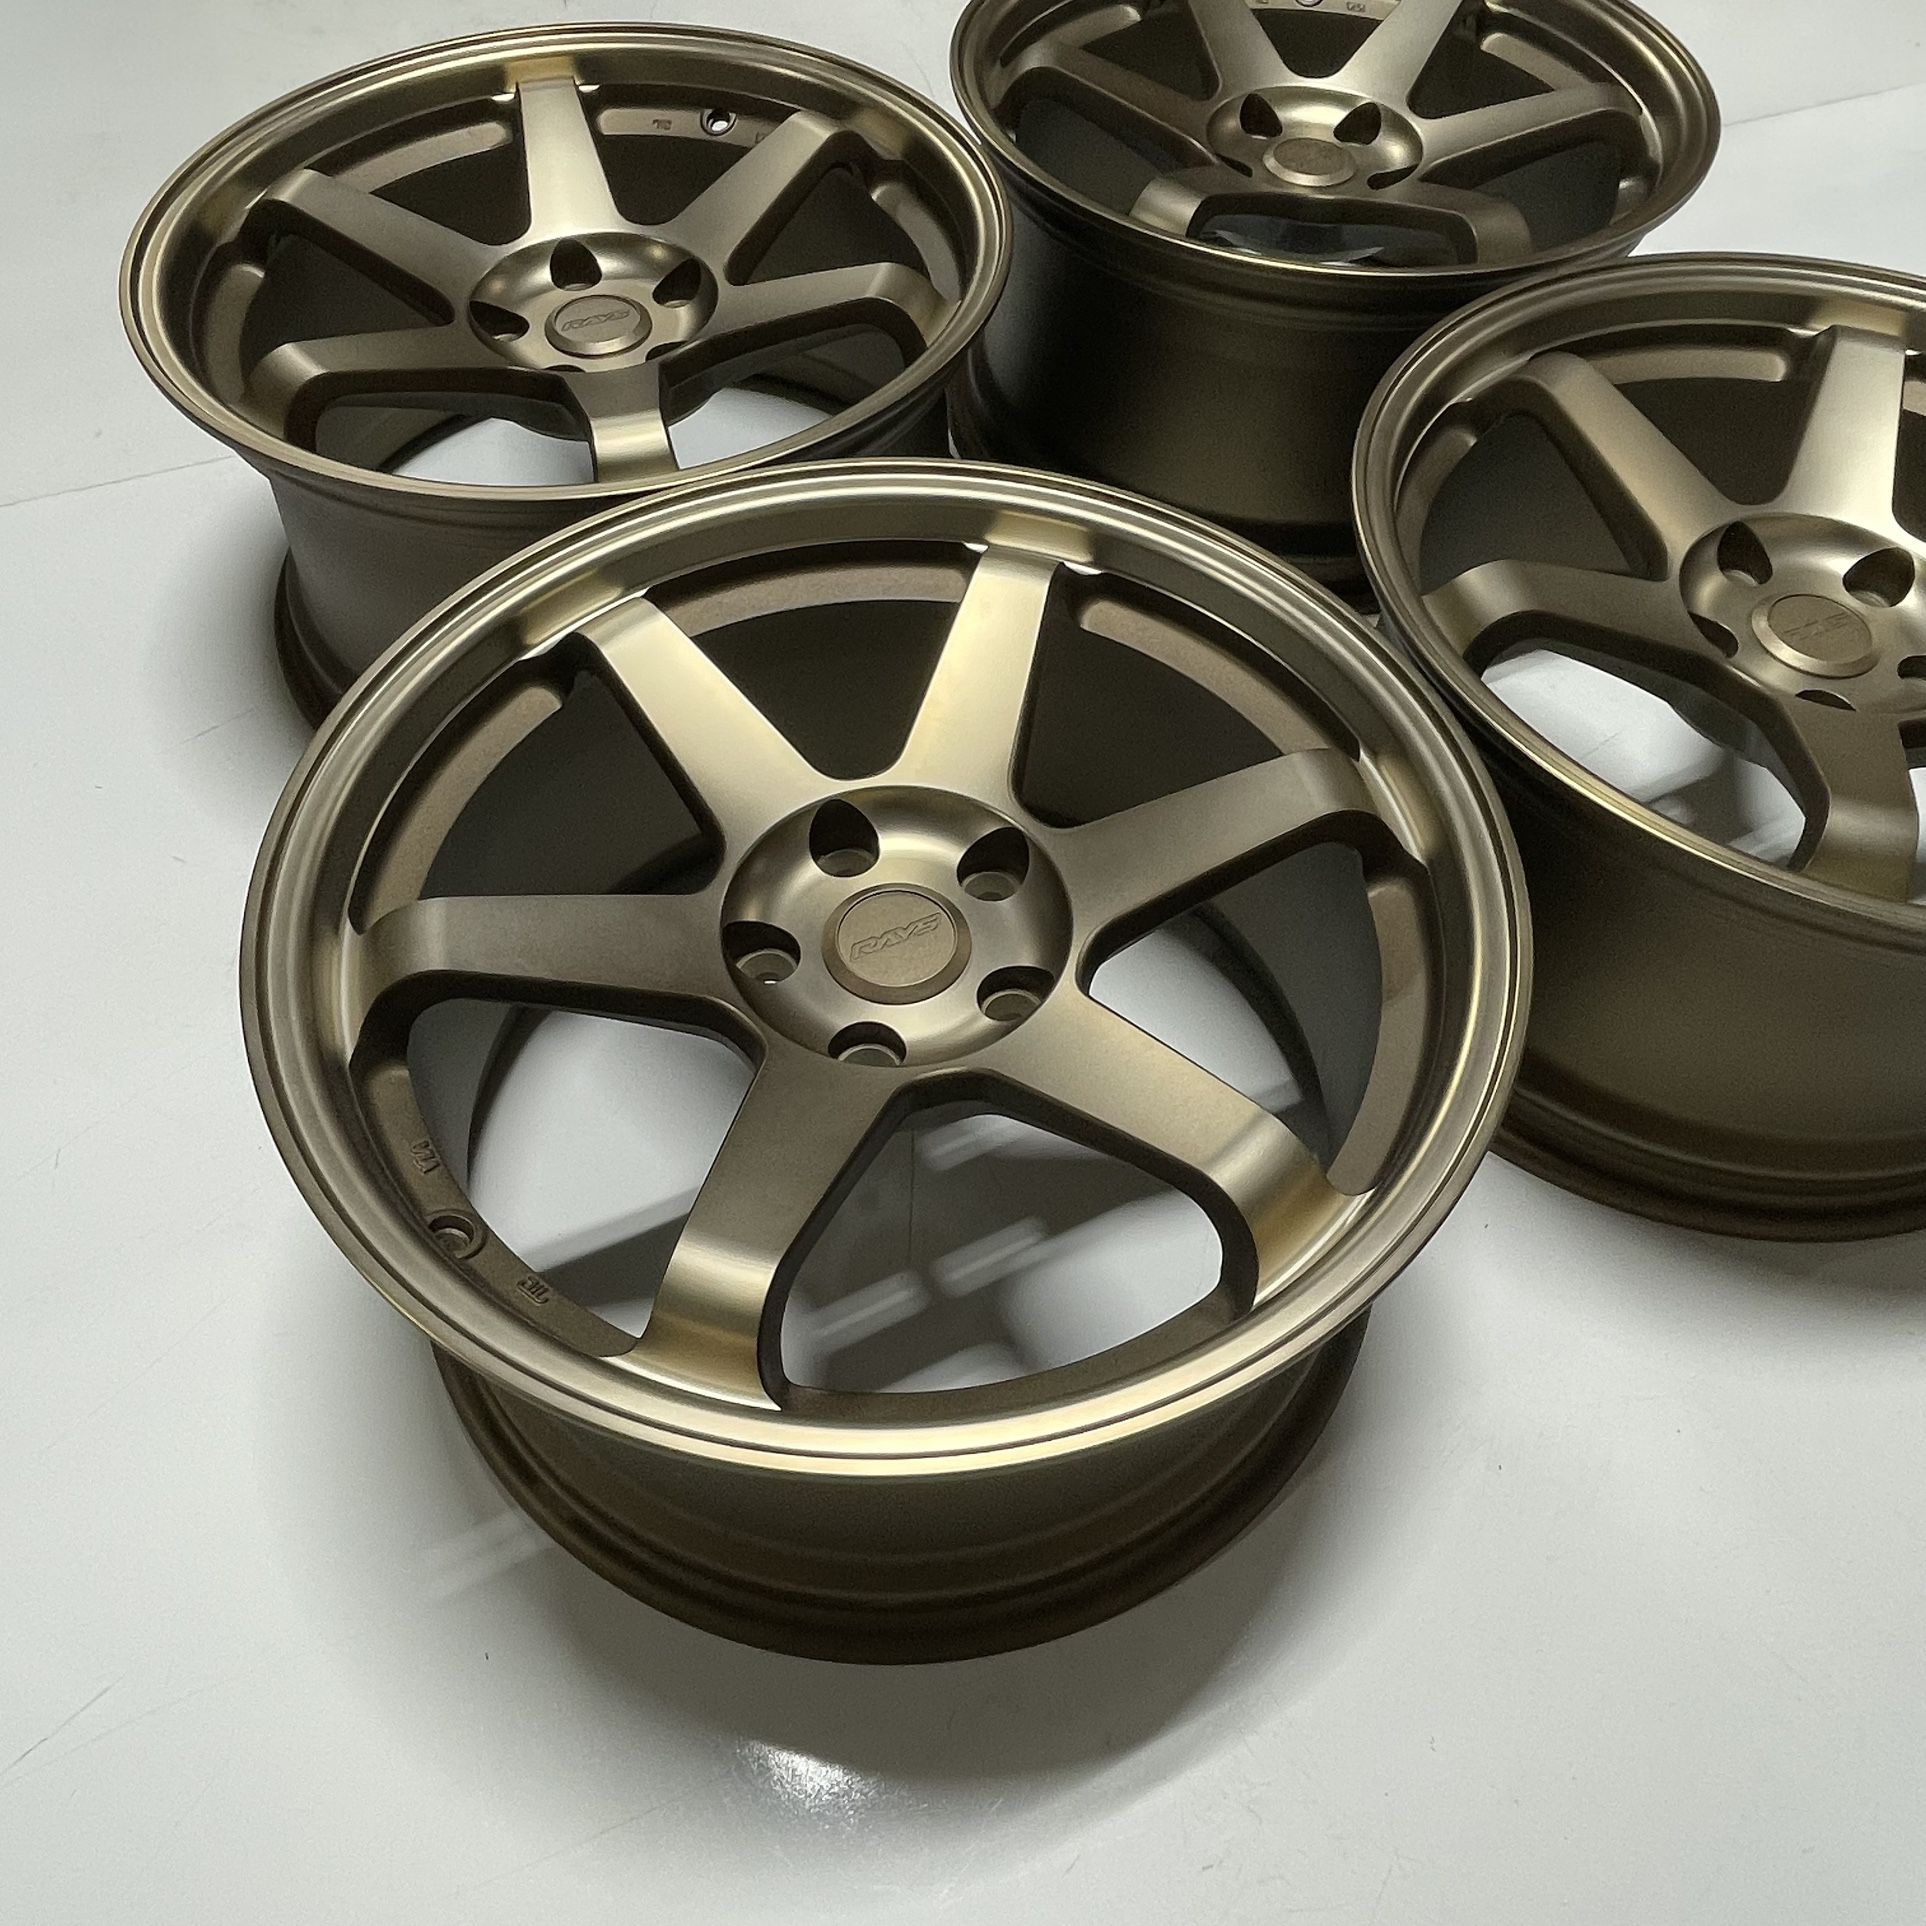 NEW 18” Concave Bronze TE37 Replica Wheels Squared Set 18x9 +30 (5x114.3)   Fits Most Toyota Scion Lexus Subaru Infiniti Tesla Mustang G35 Q50 Q60 G37